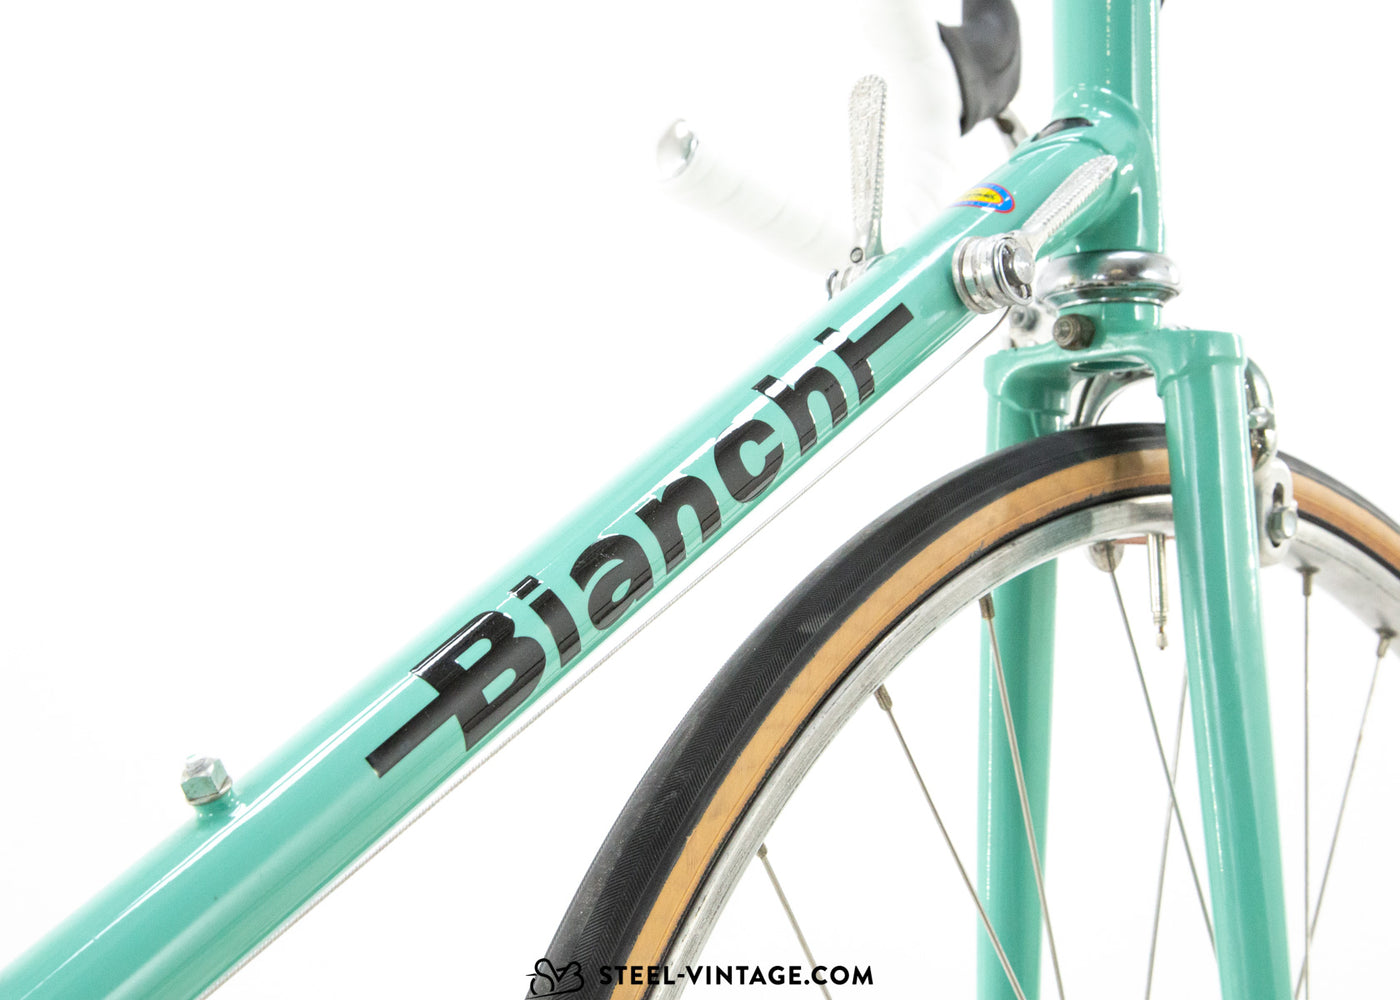 Bianchi Sprint Road Bicycle 1970